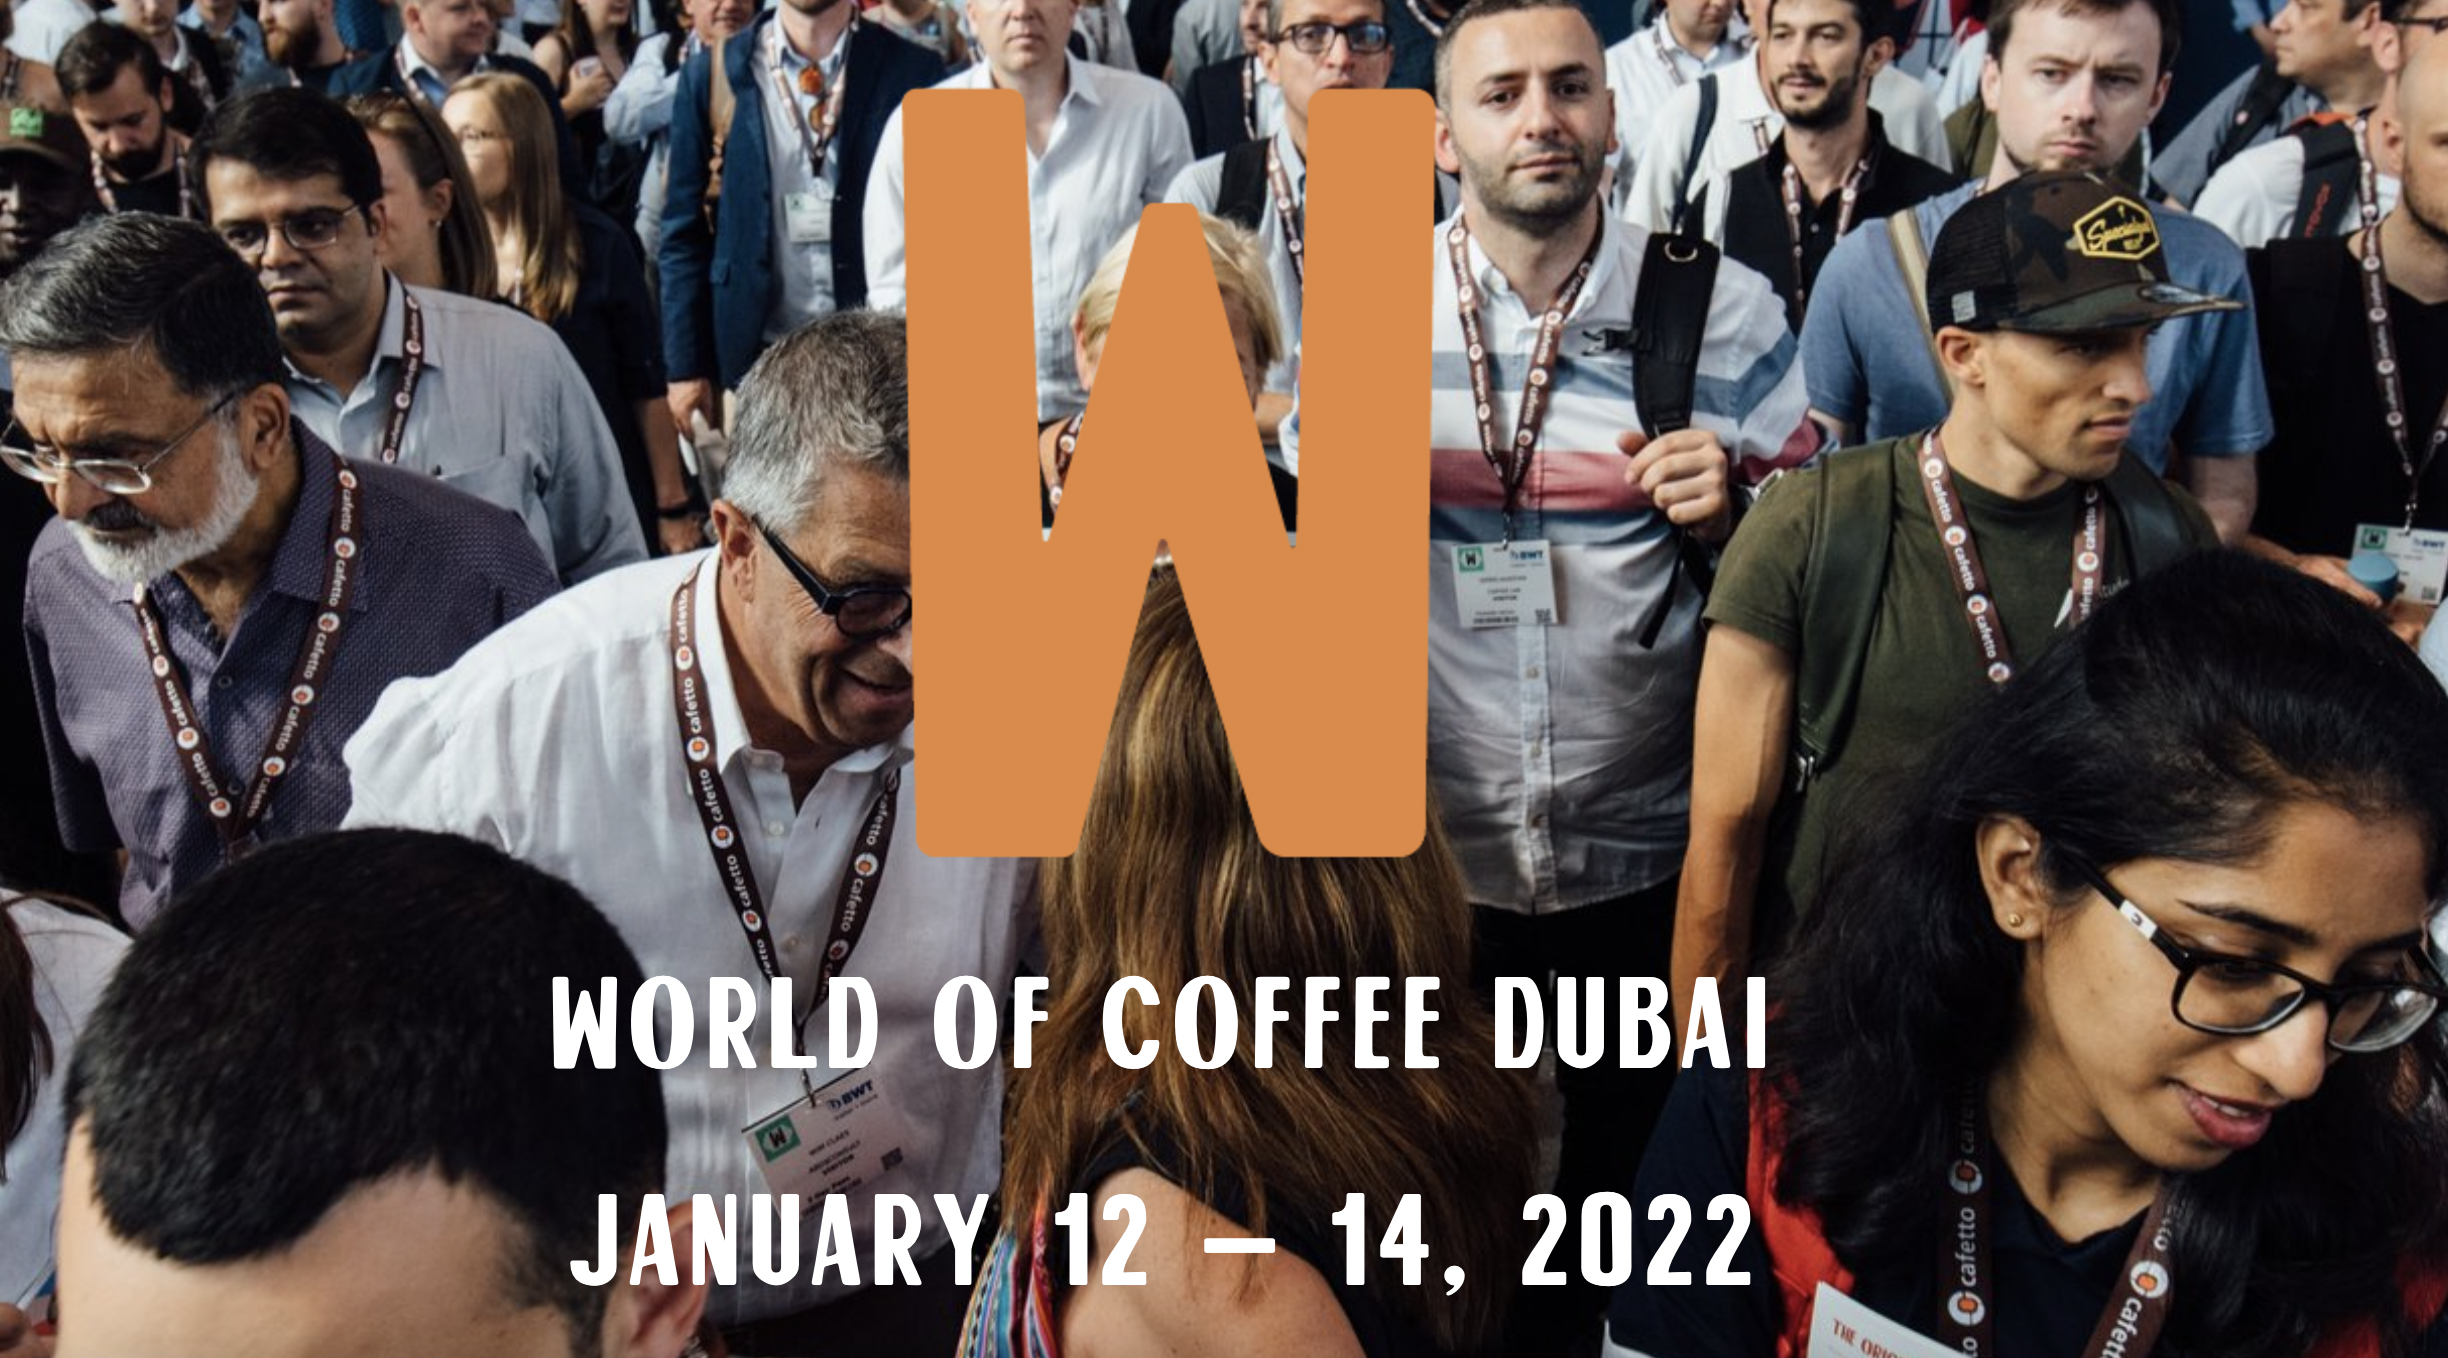 World of Coffee Dubai